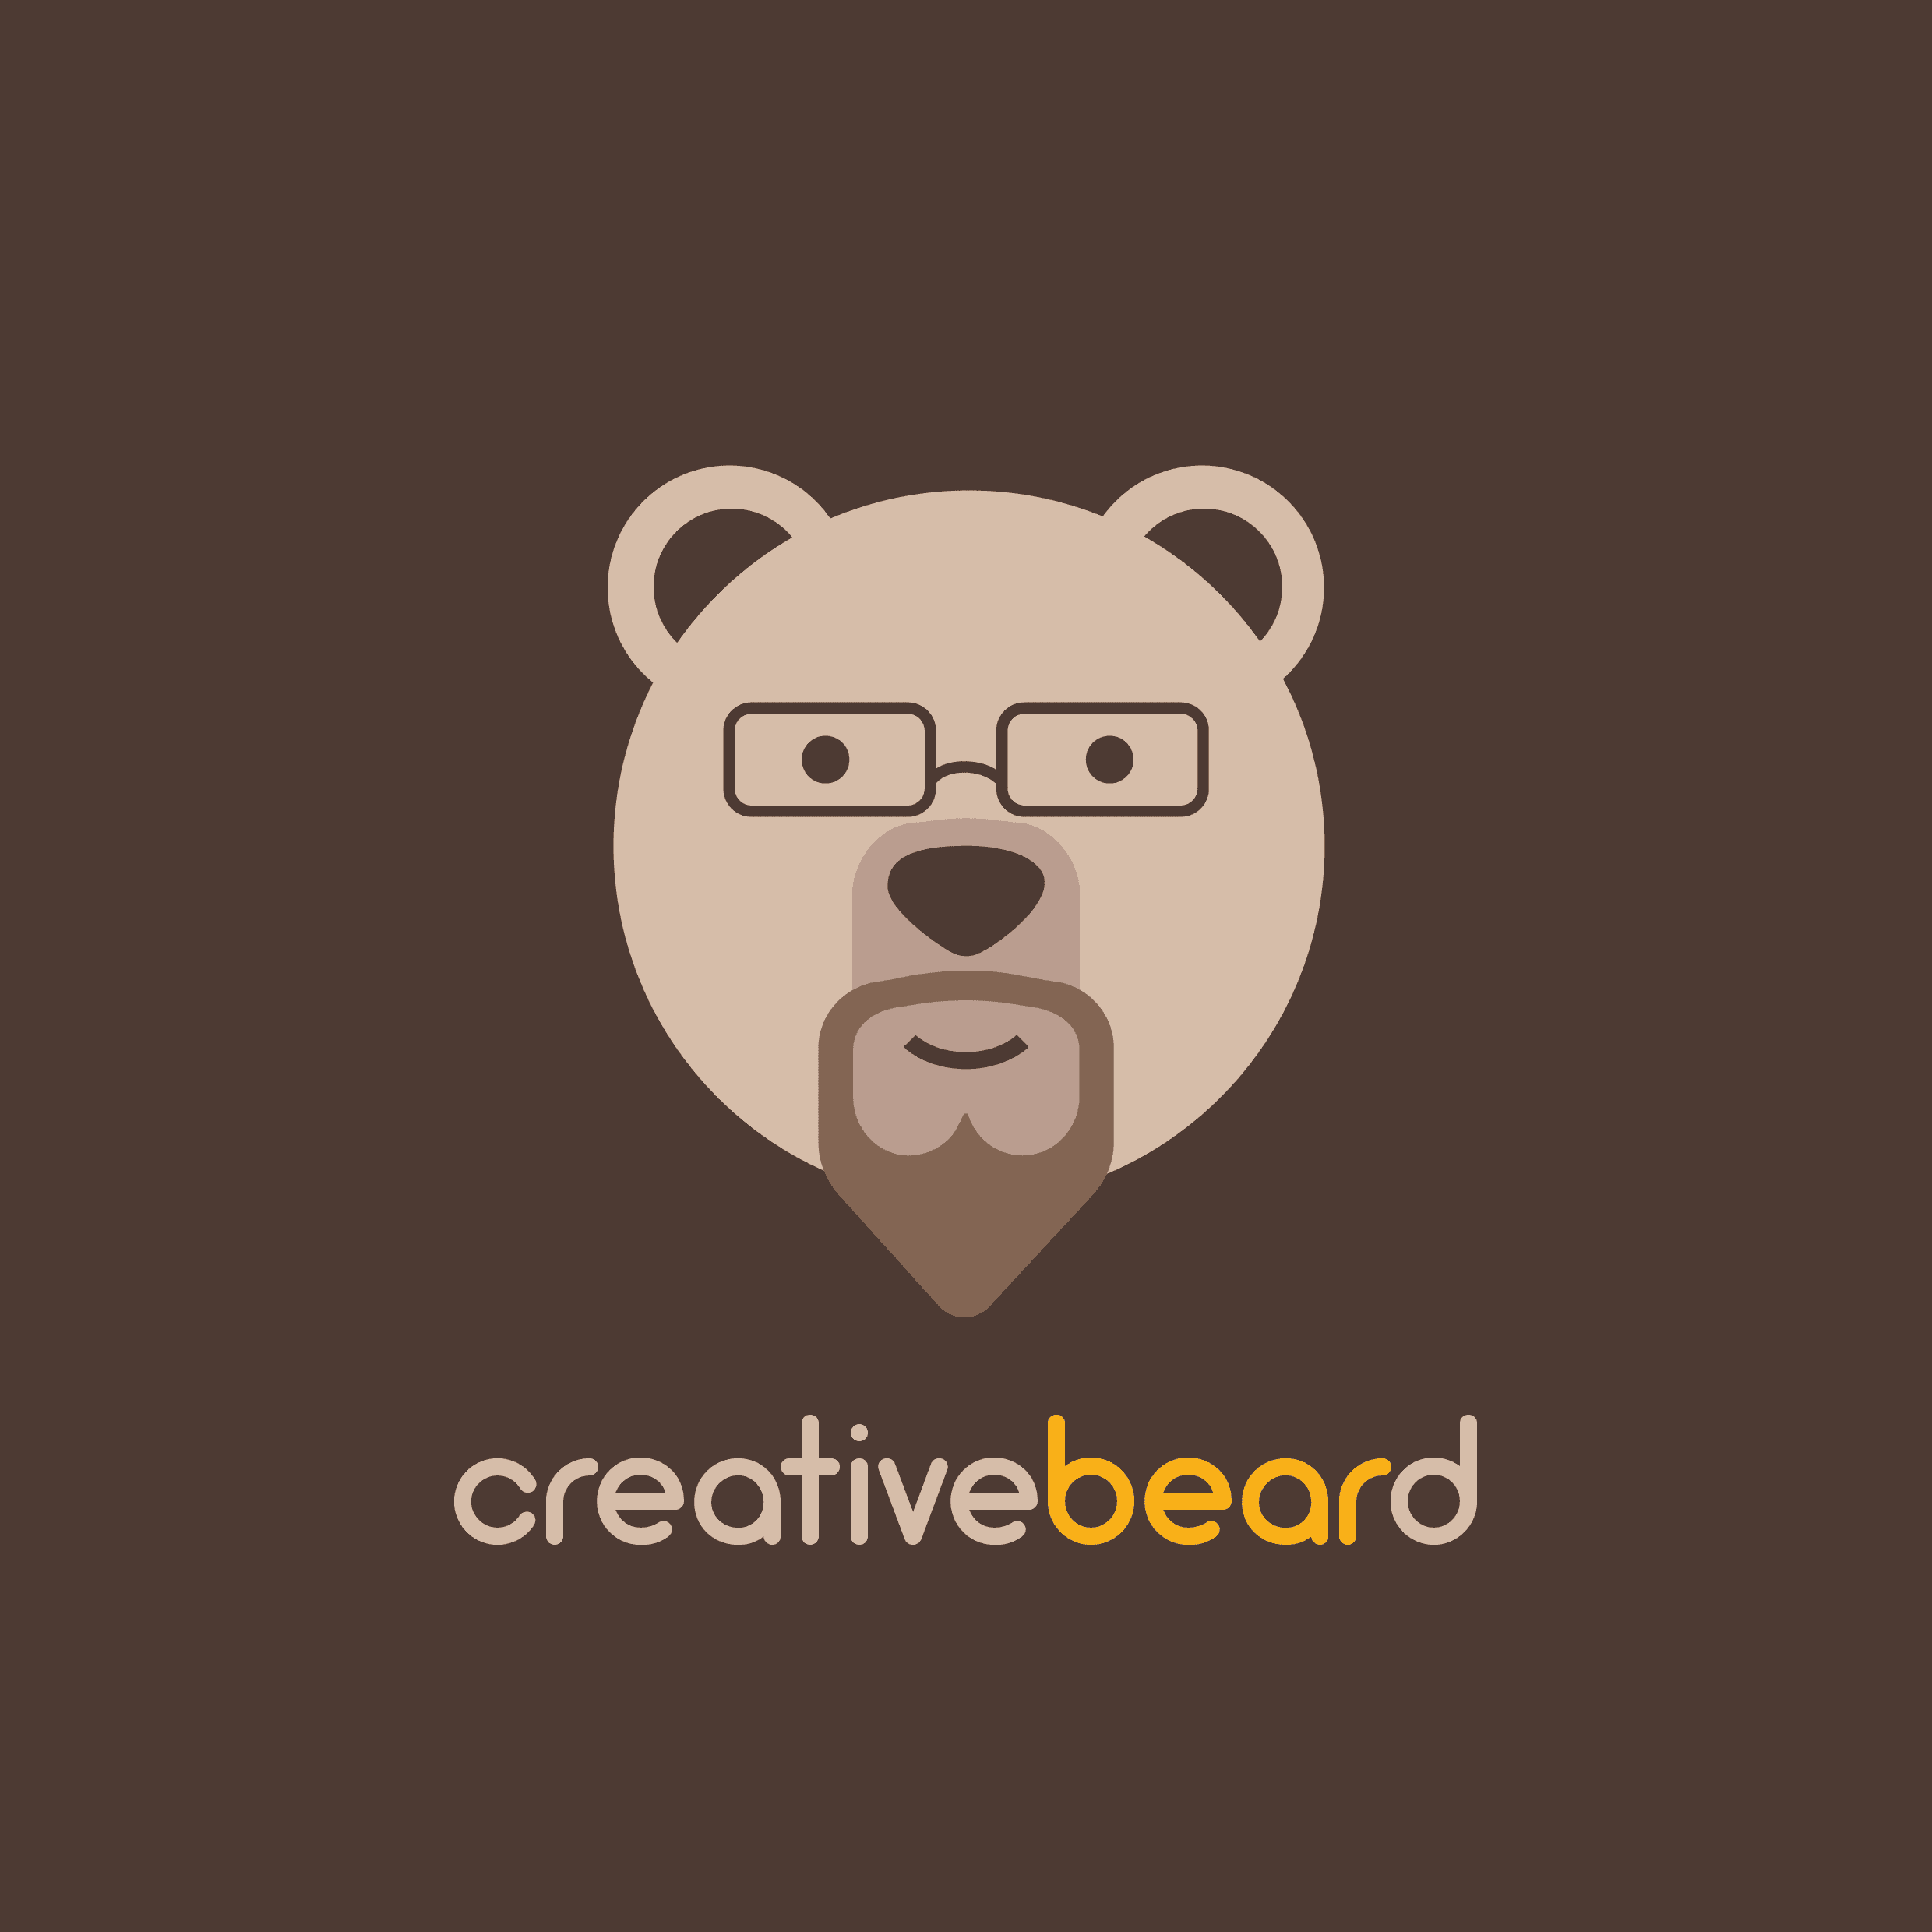 CreativeBeard